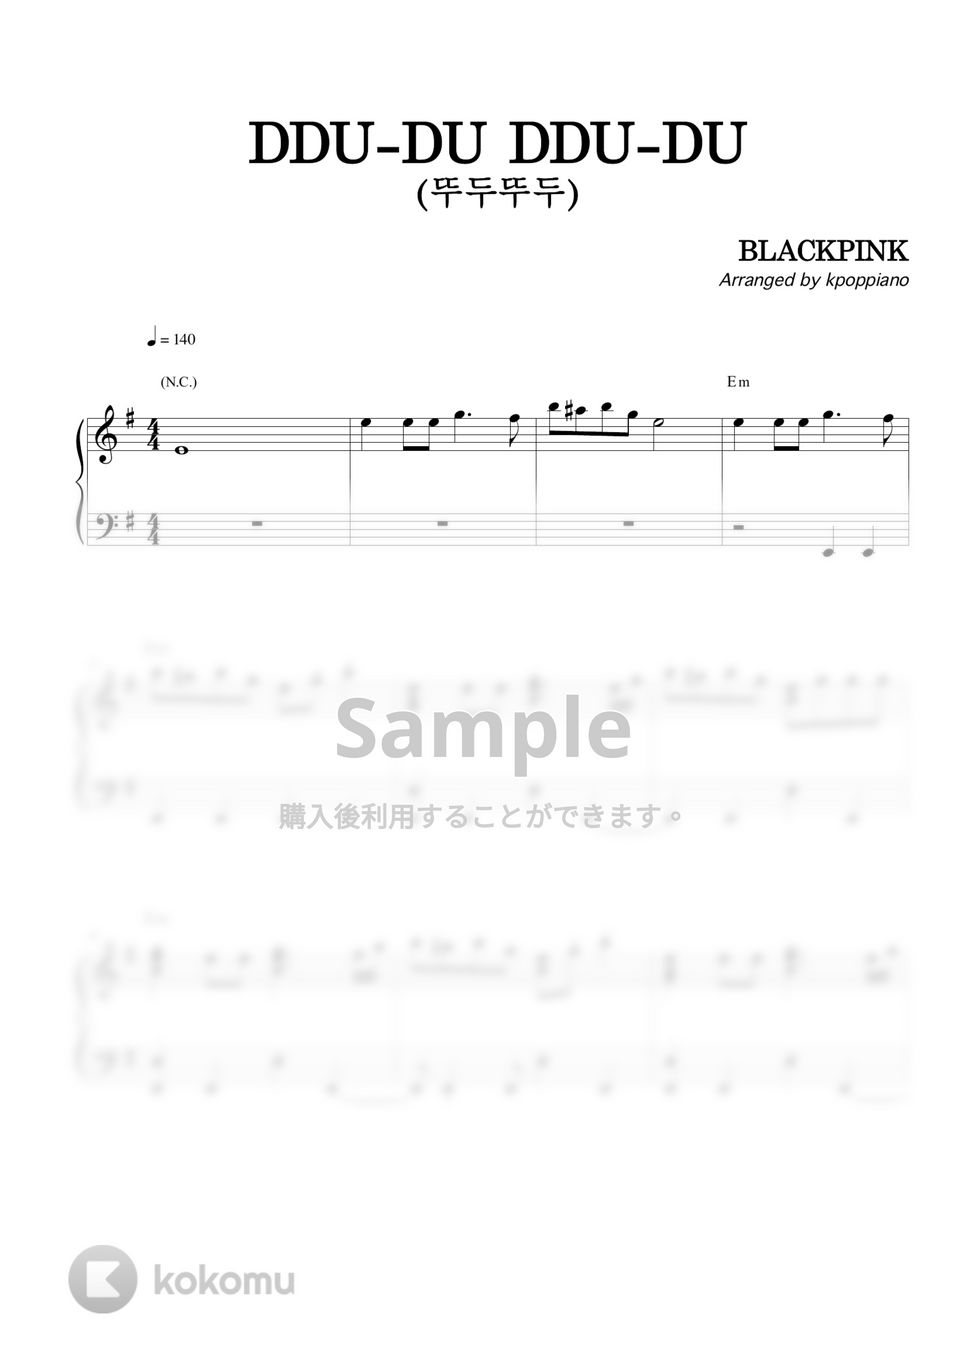 BLACKPINK - DDU-DU DDU-DU by KPOP PIANO